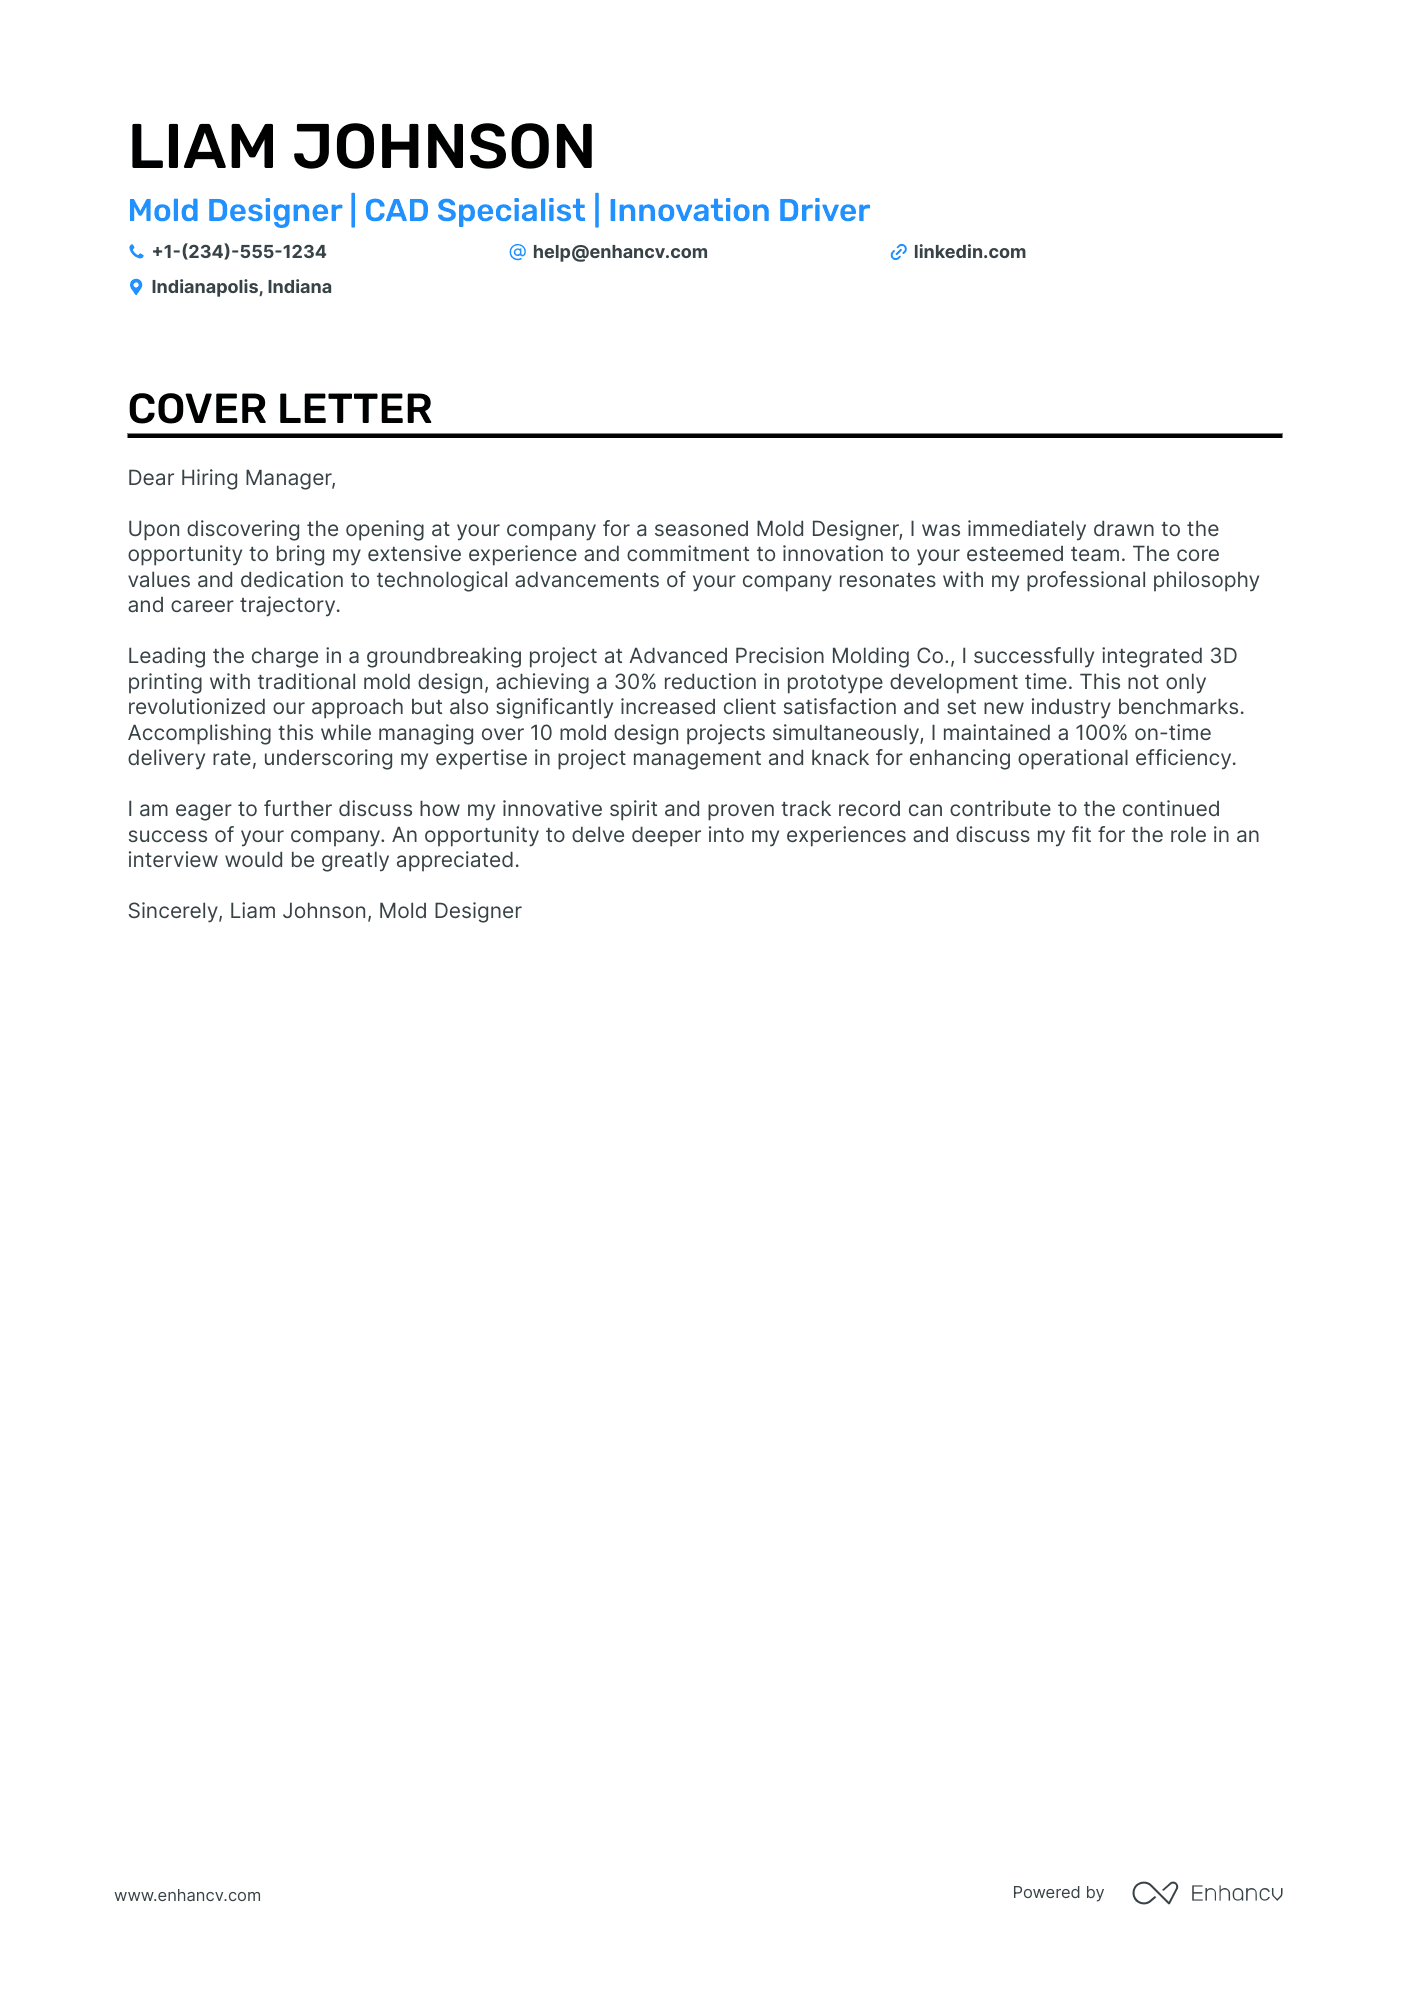 Mold Designer cover letter